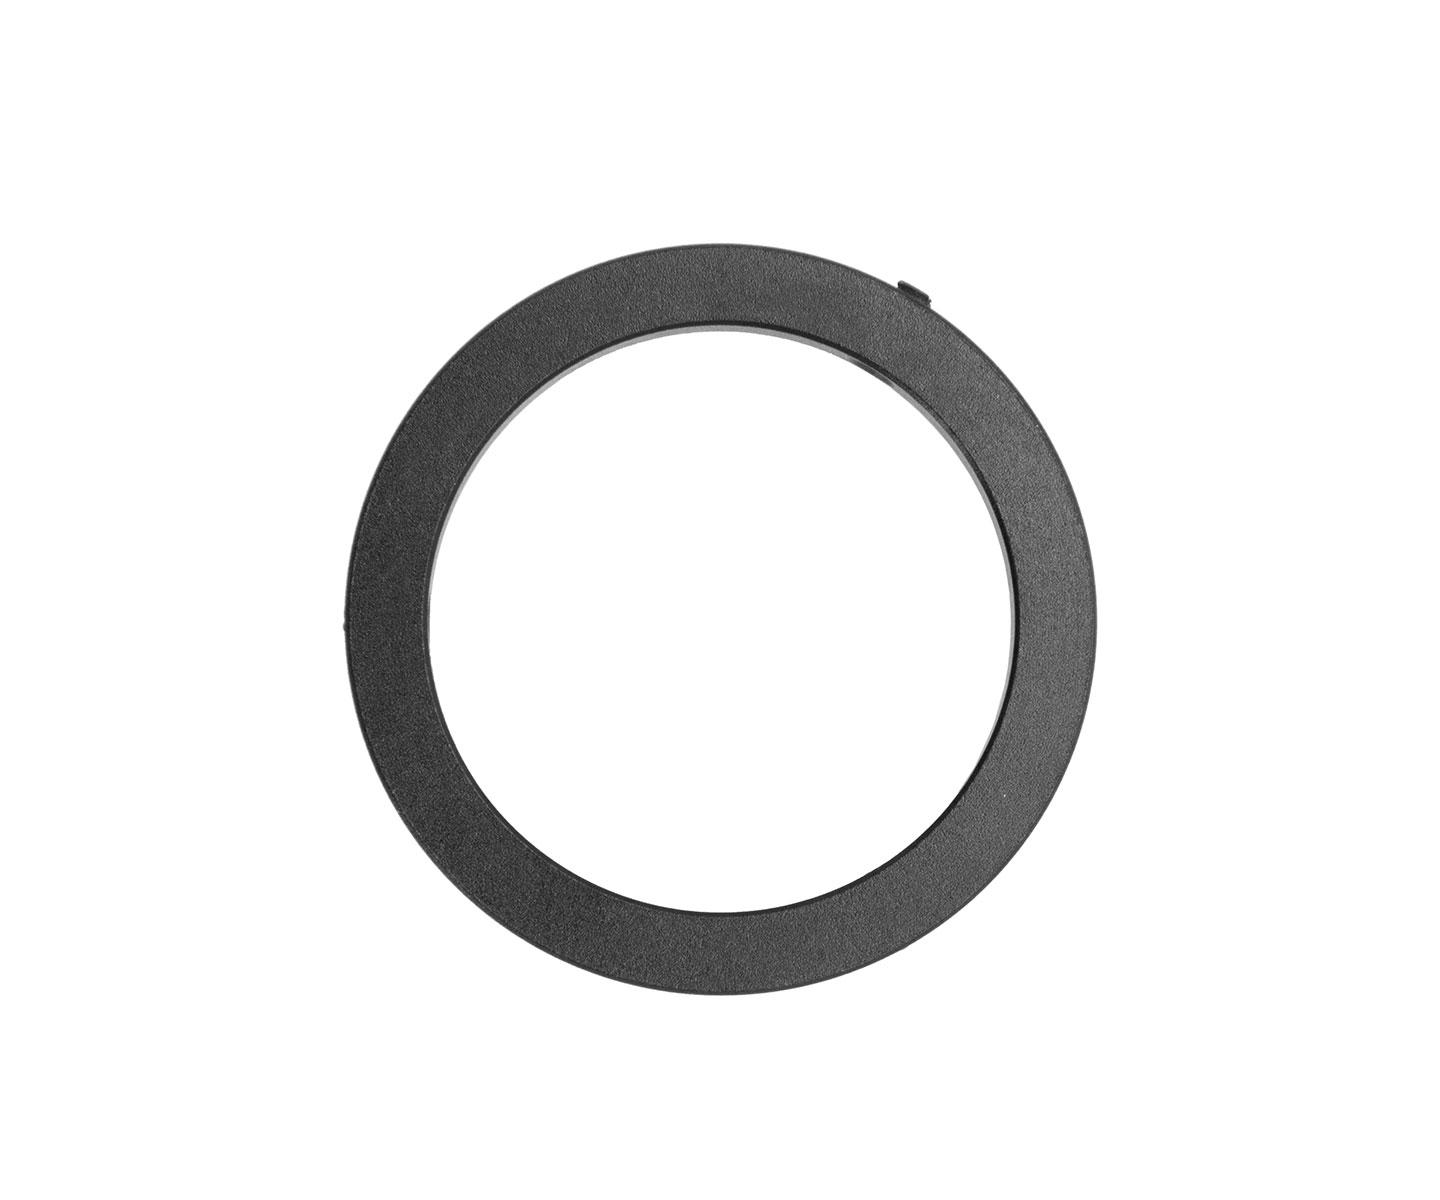   TS-Optics 1.25" parfocalizing ring / CCD locking ring - for 1.25" barrels [EN]  